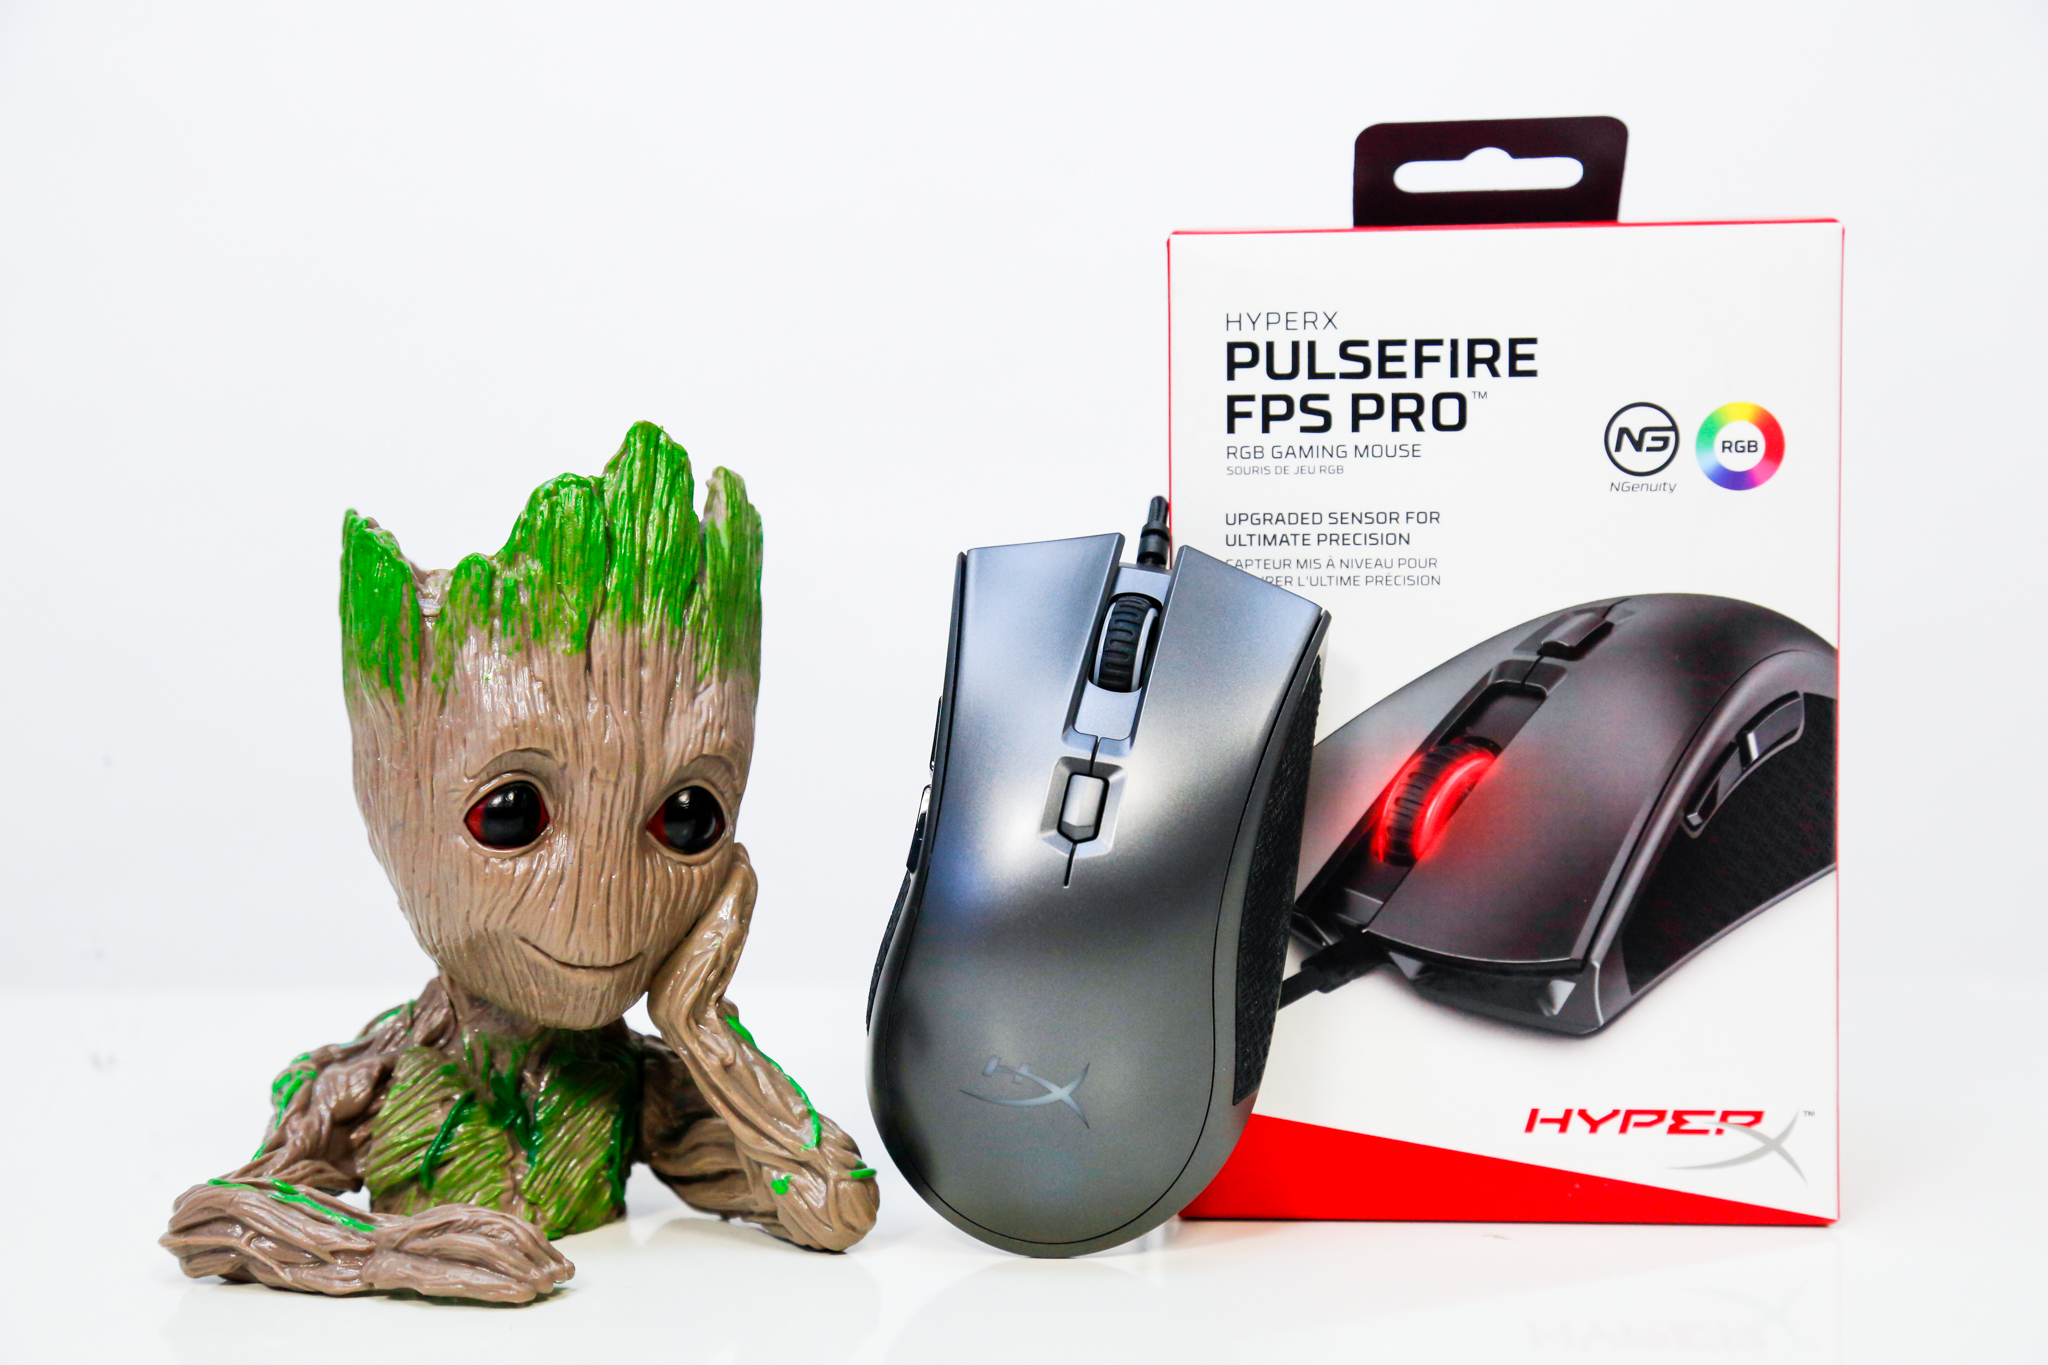 Tổng thể chuột HyperX PulseFire Pro FPS